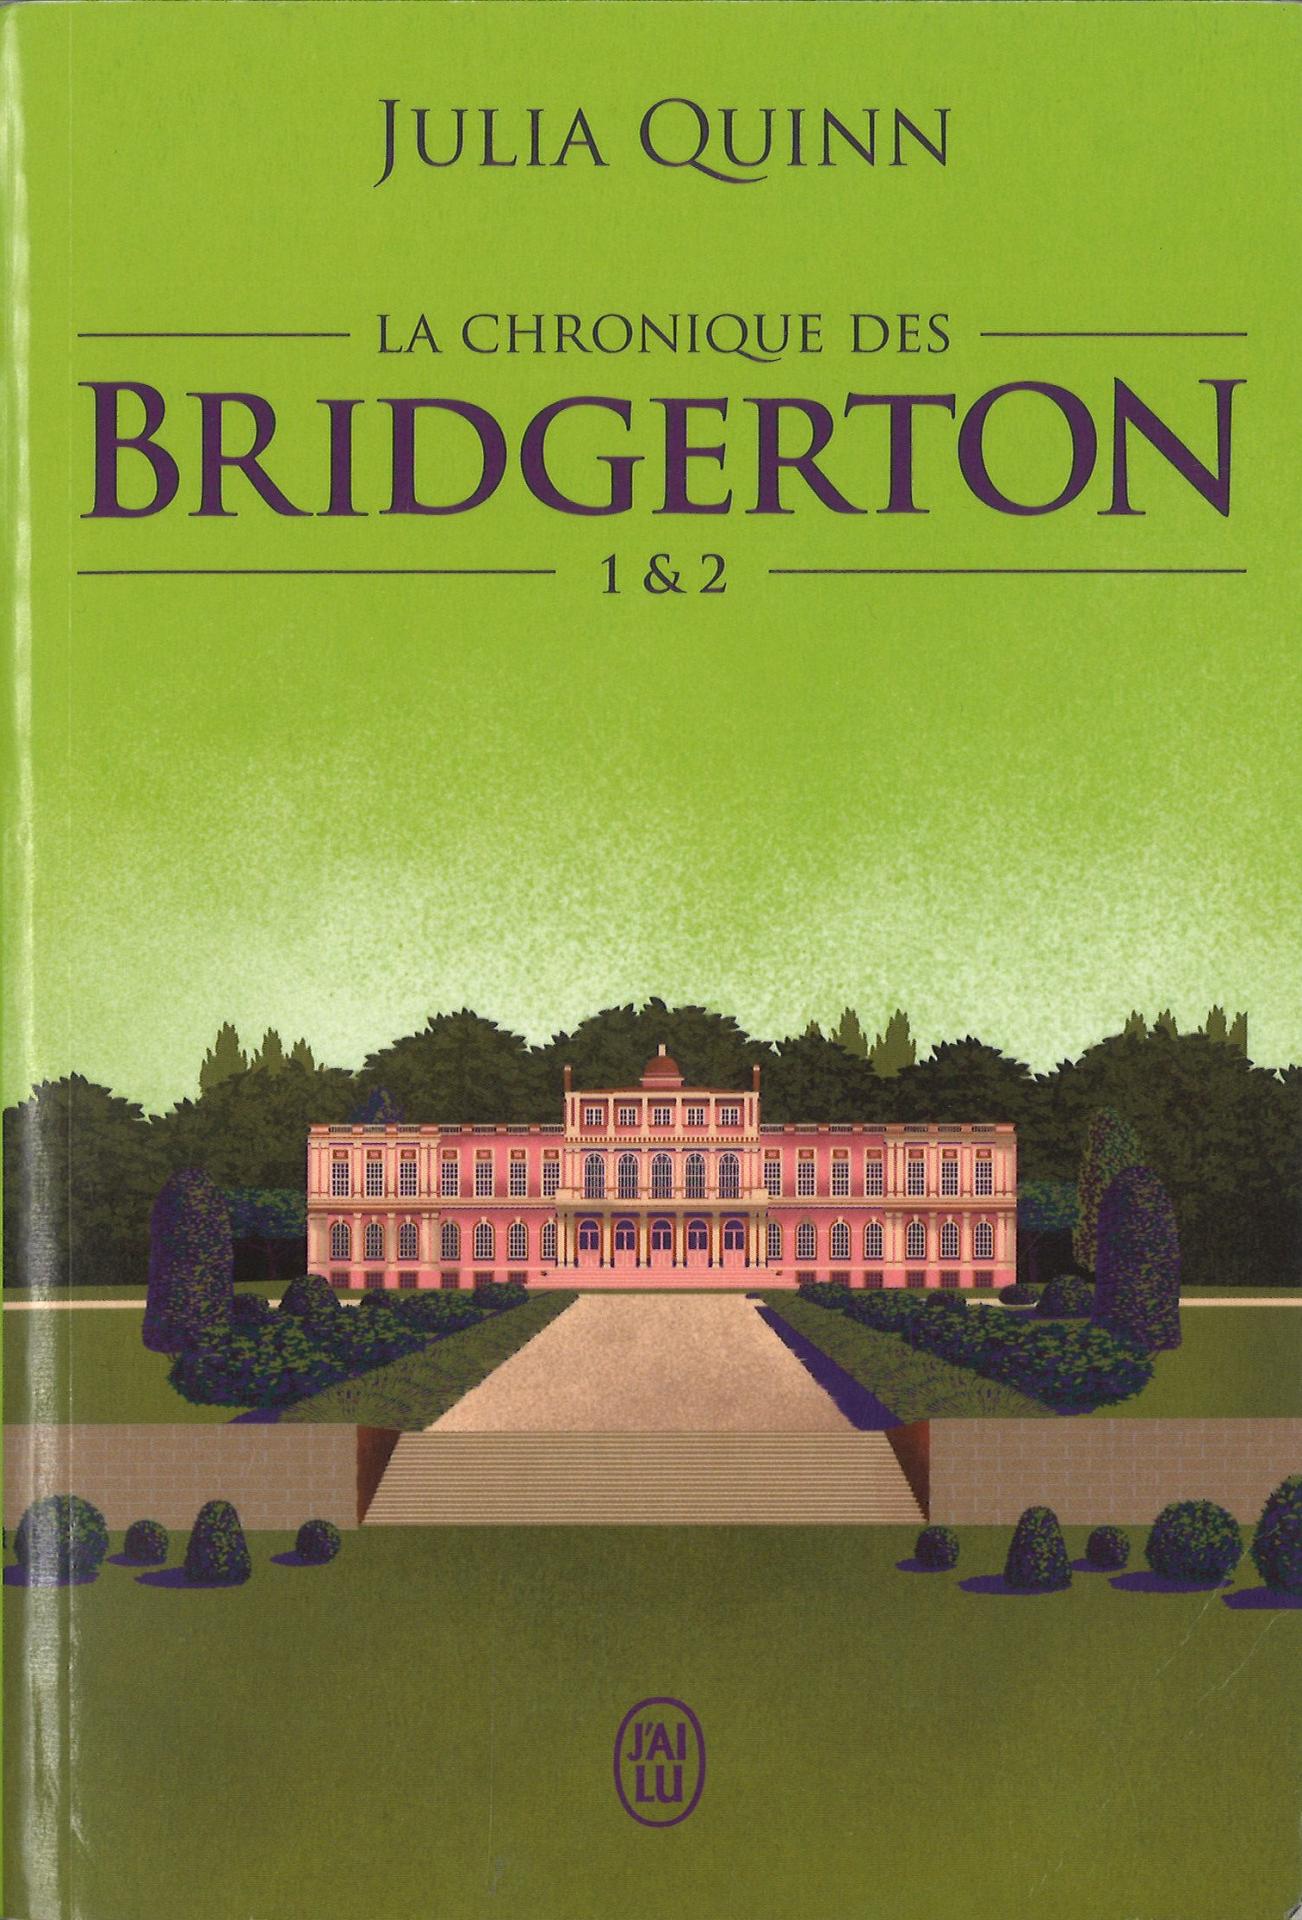 Bridgerton 1